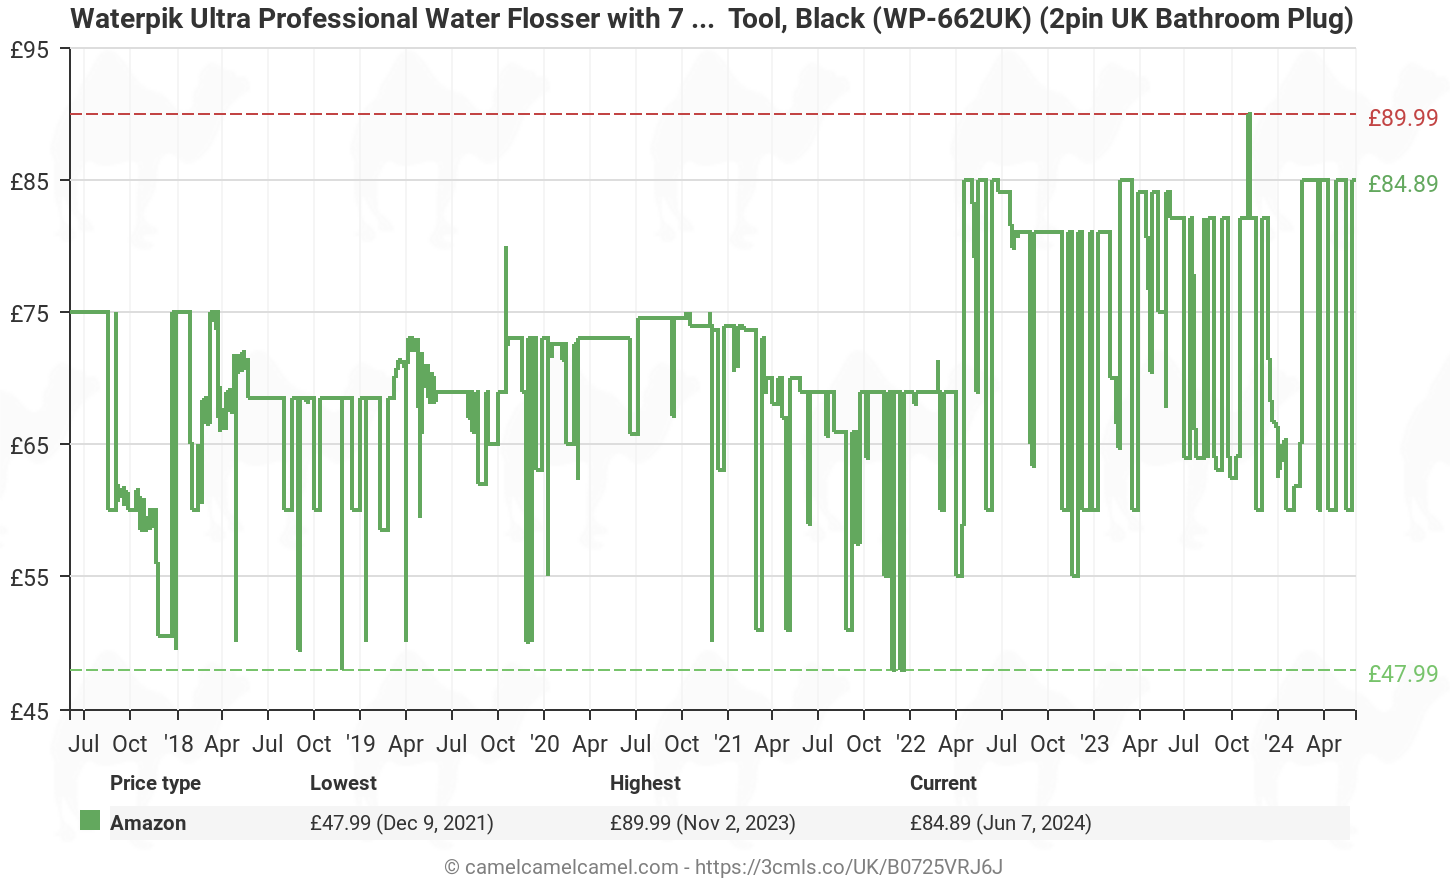 Amazon price history chart for Waterpik WP-662UK Ultra Professional Water Flosser - Black Edition (UK 2-Pin Bathroom Plug) (B0725VRJ6J)